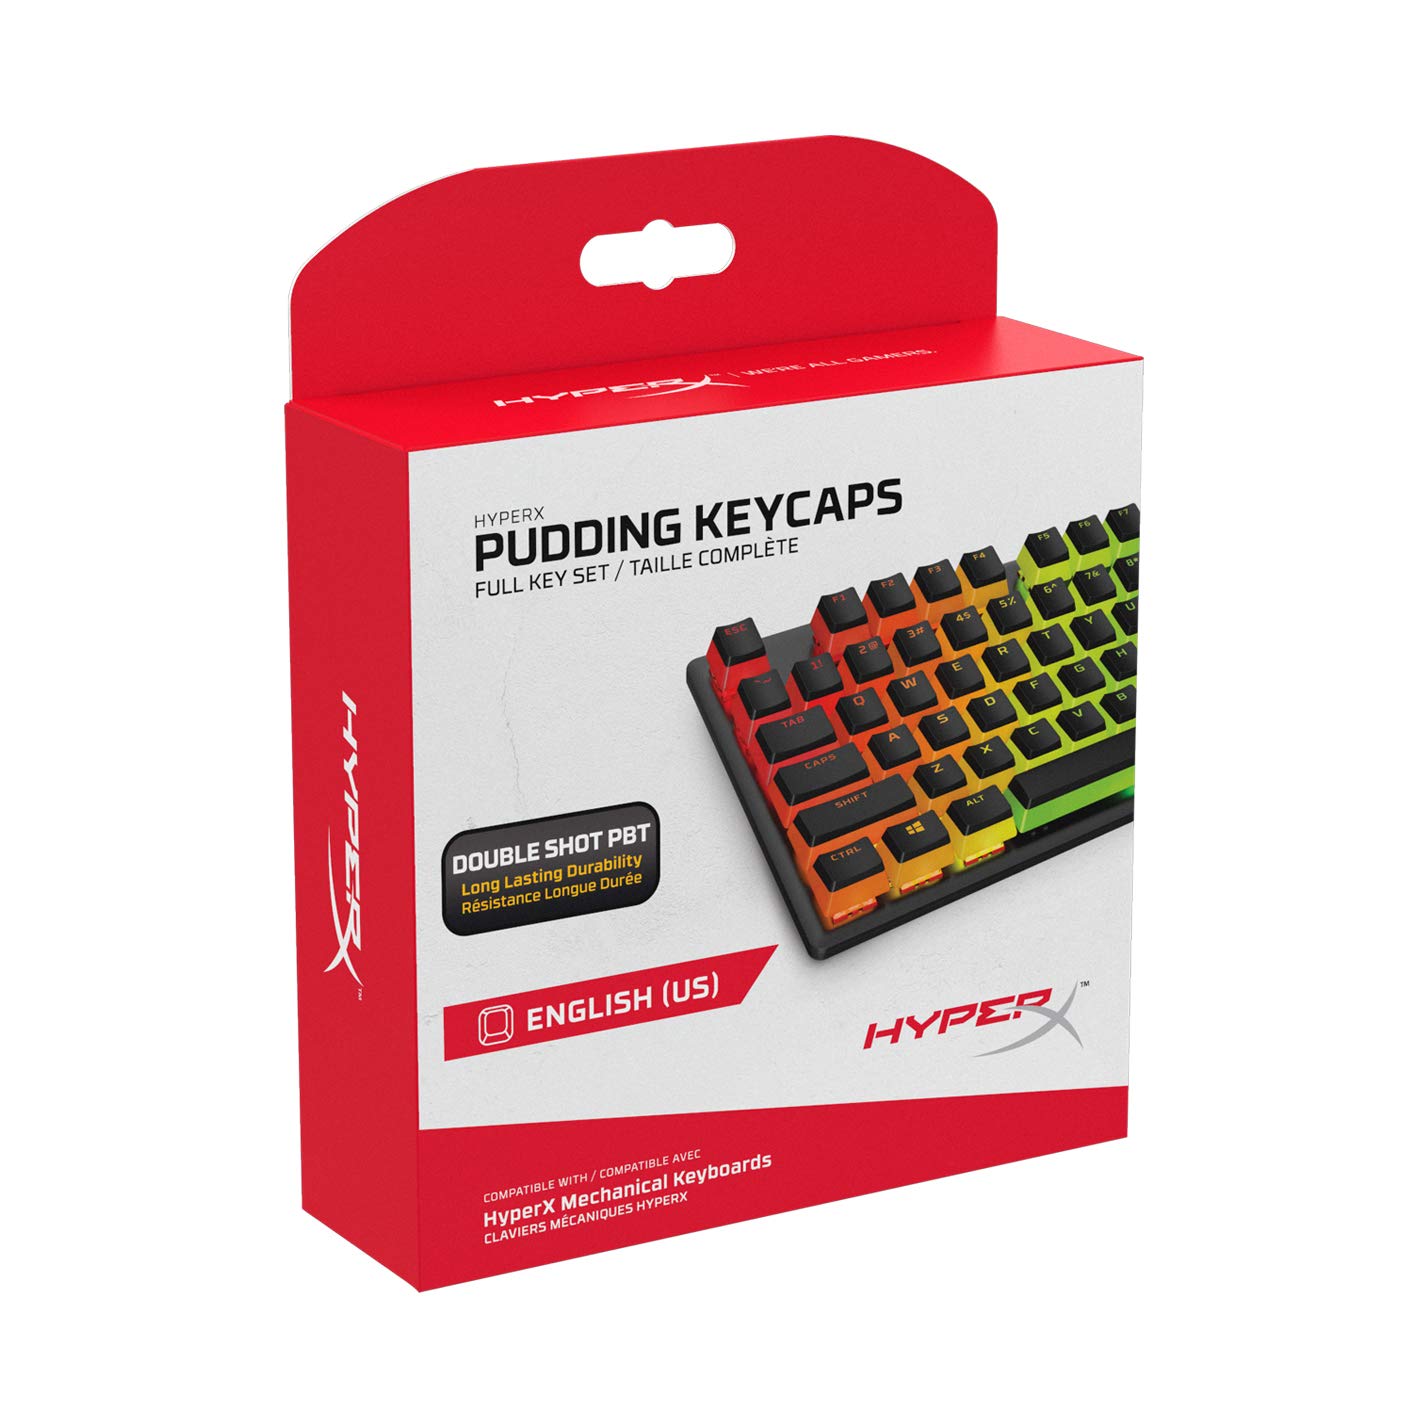 HyperX Pudding Keycaps (black) - $14.99 at Amazon